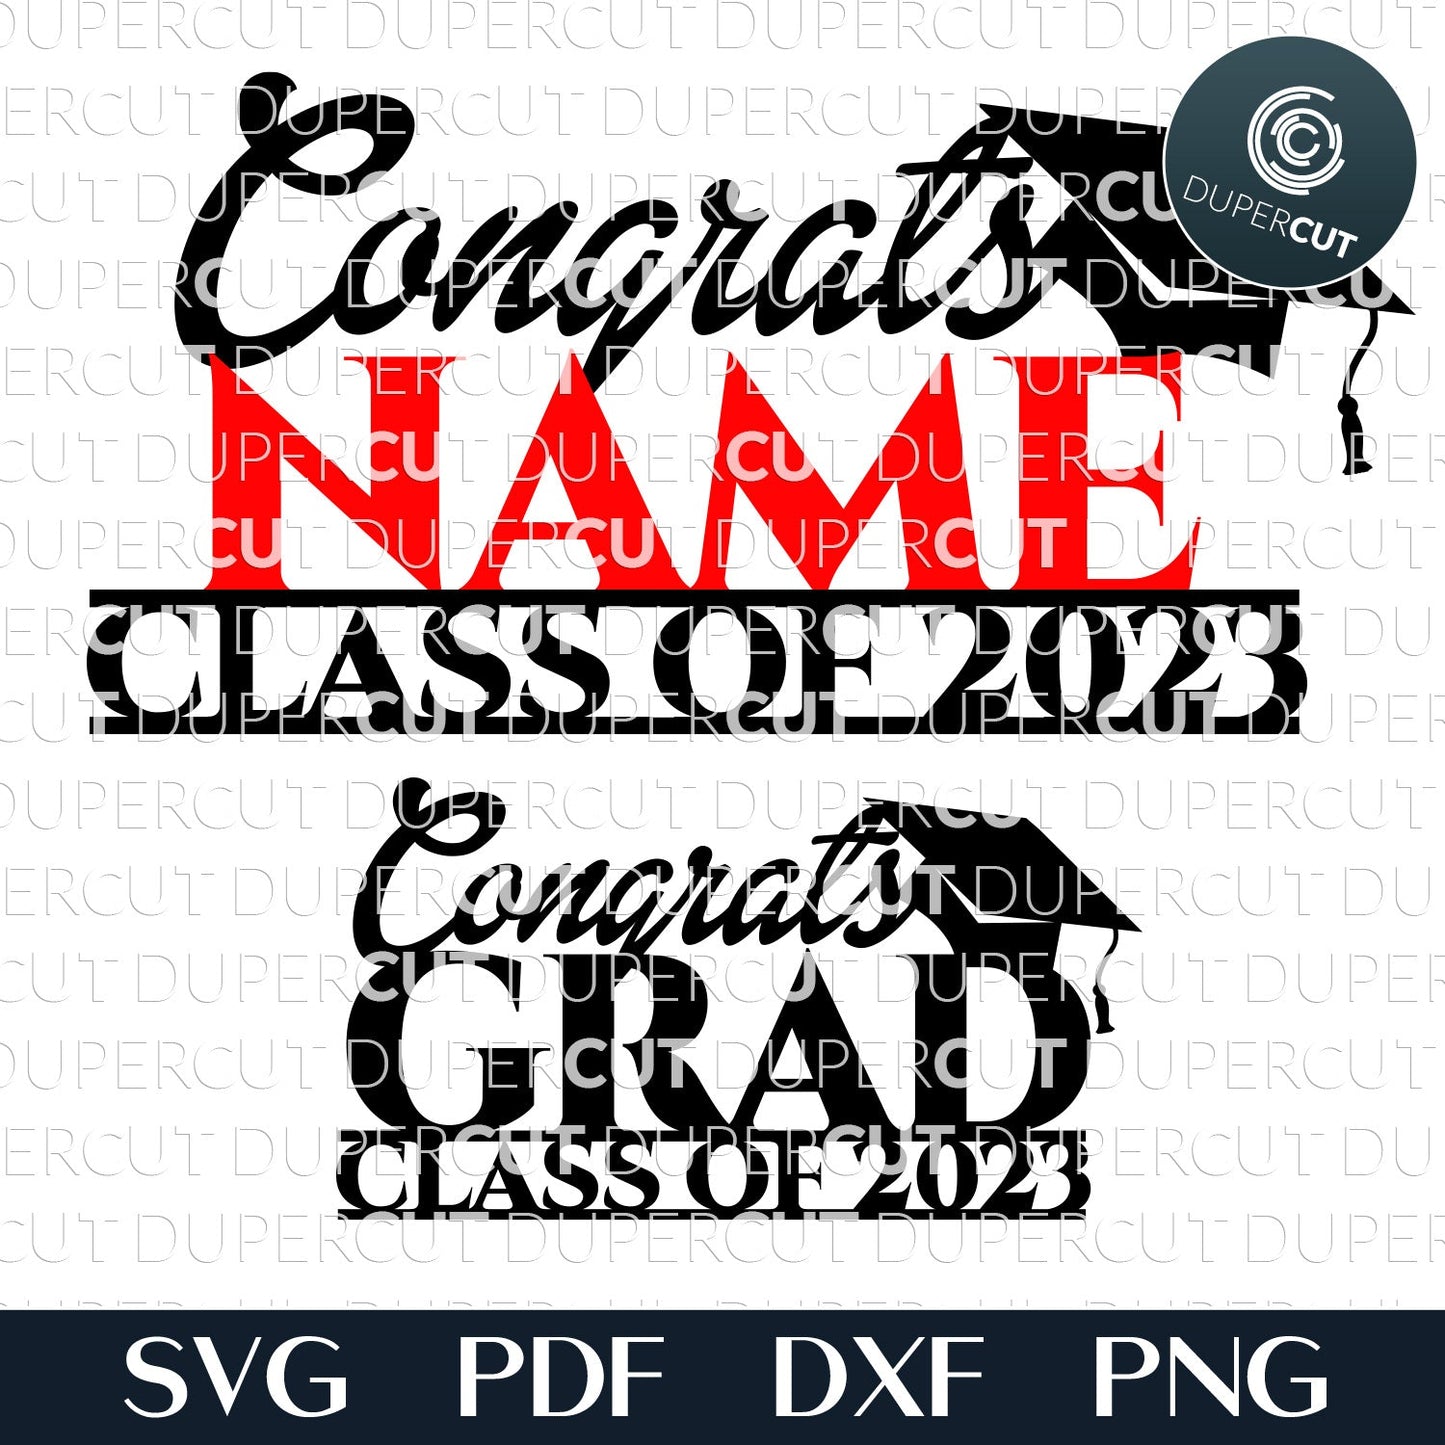 Class of 2023 Congrats Grad - add custom name - SVG DXF personalized files for laser cut machines Glowforge, Cricut, Silhouette, CNC plasma, scrollsaw pattern by www.DuperCut.com